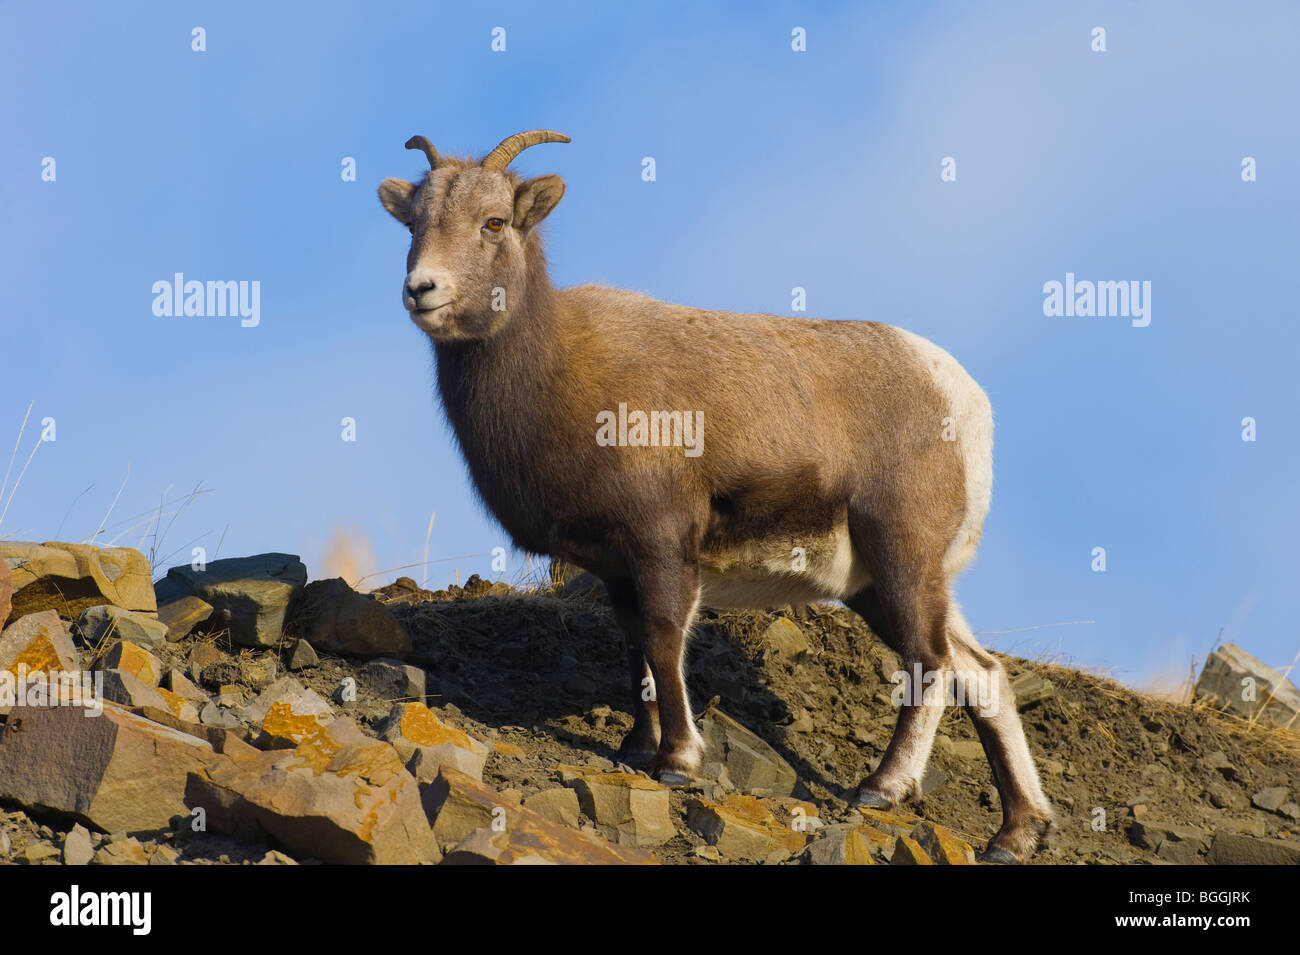 A female Bighorn sheep in her natural habitat. Stock Photo